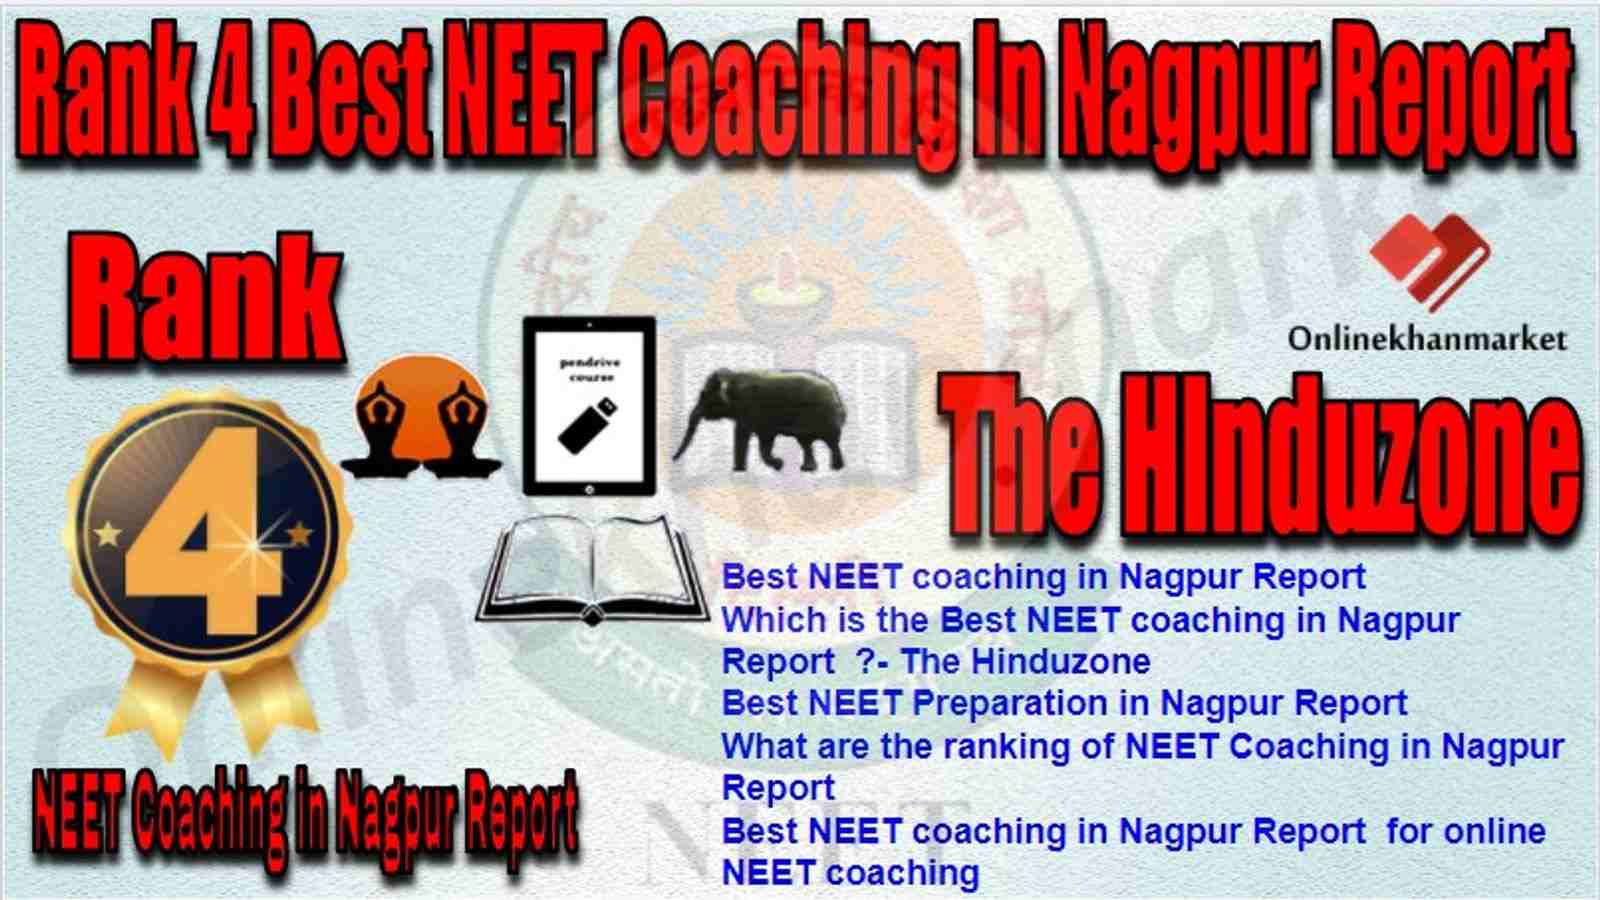 Rank 4 Best NEET Coaching nagpur report